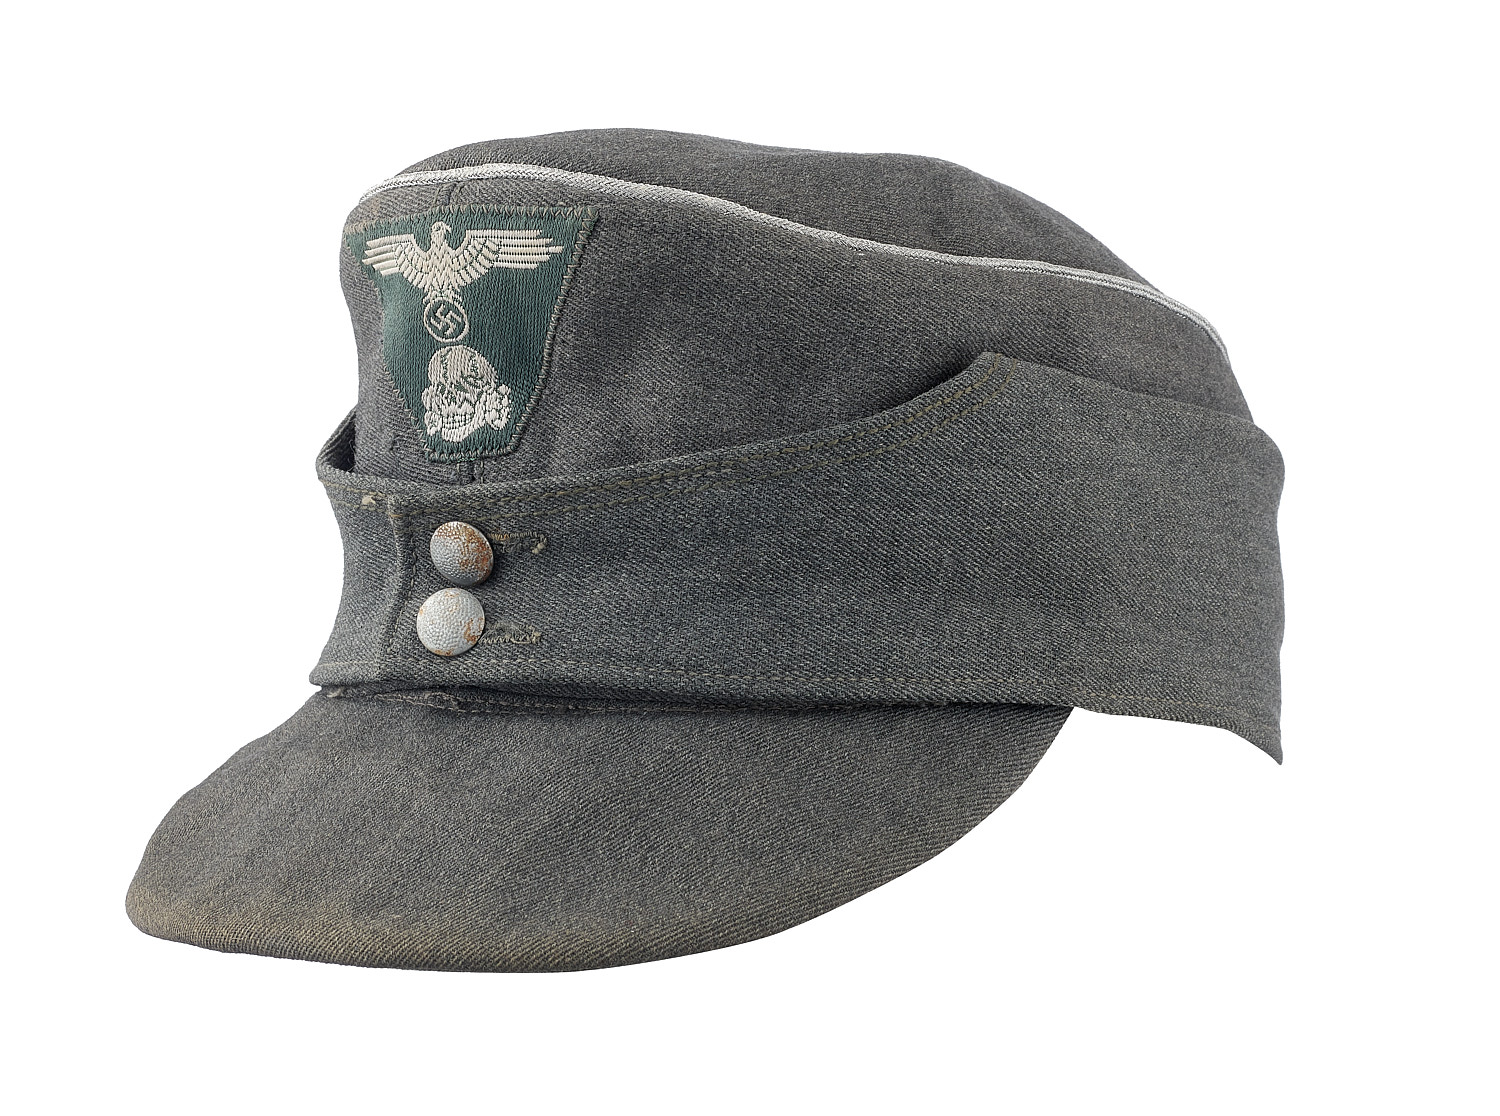 German Third Reich Waffen SS Officer M43 field cap A fine example of grey gaberdine with rayon